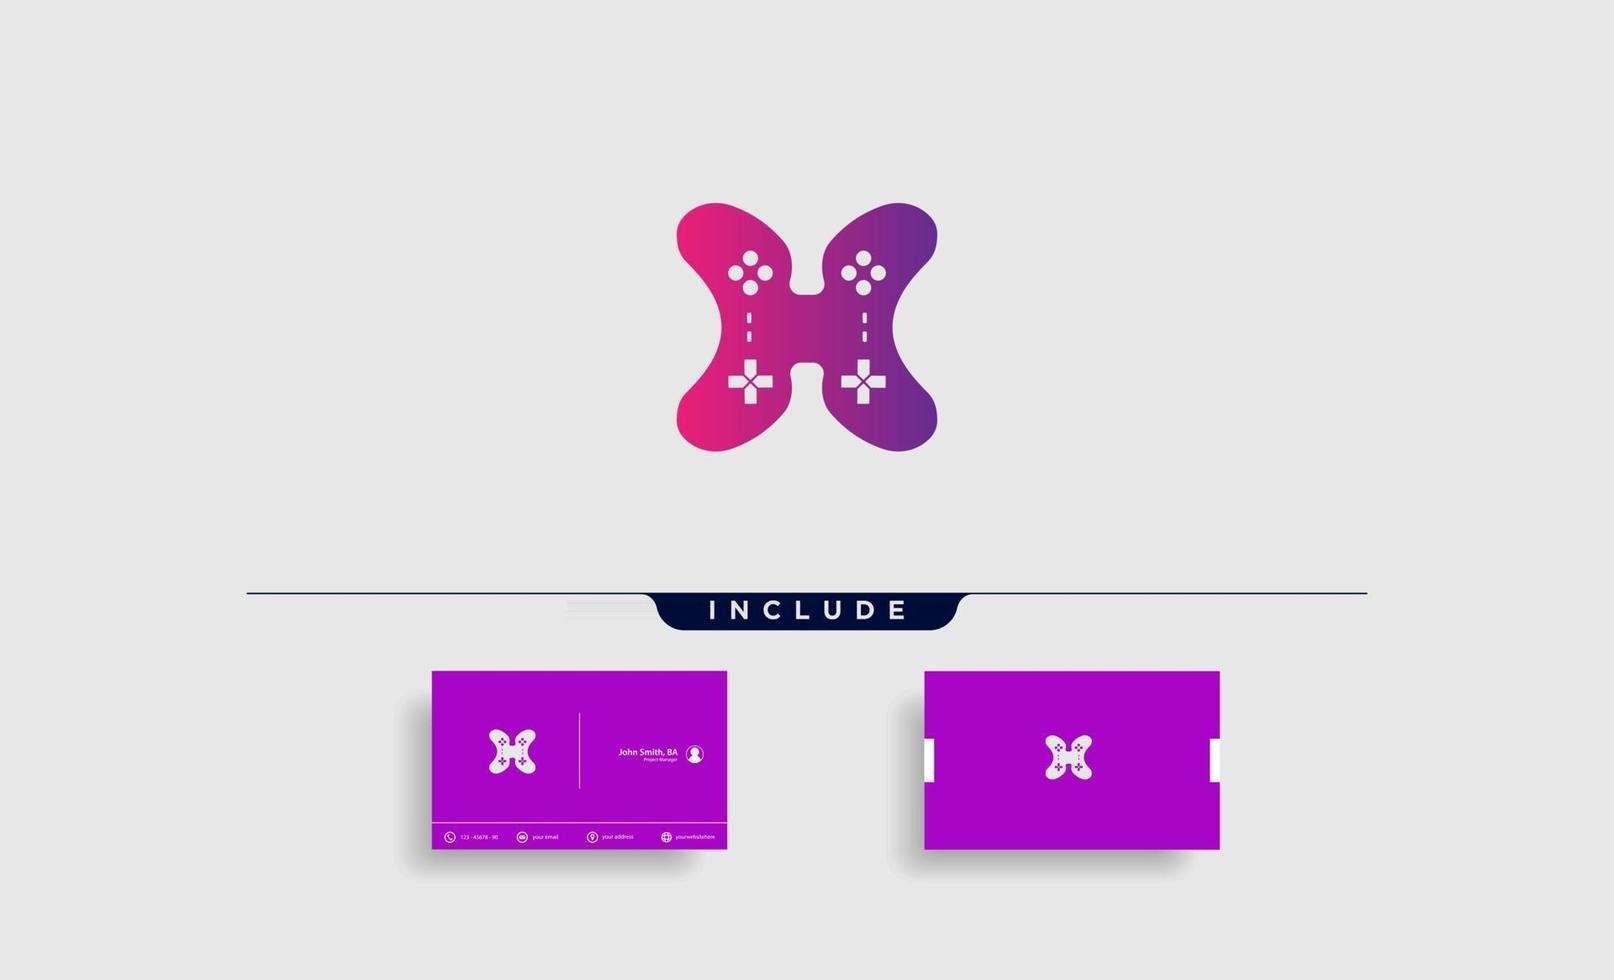 Buchstabe x Spiel Logo Design Vorlage Vektor-Illustration Gamepad Symbol Element Vektor